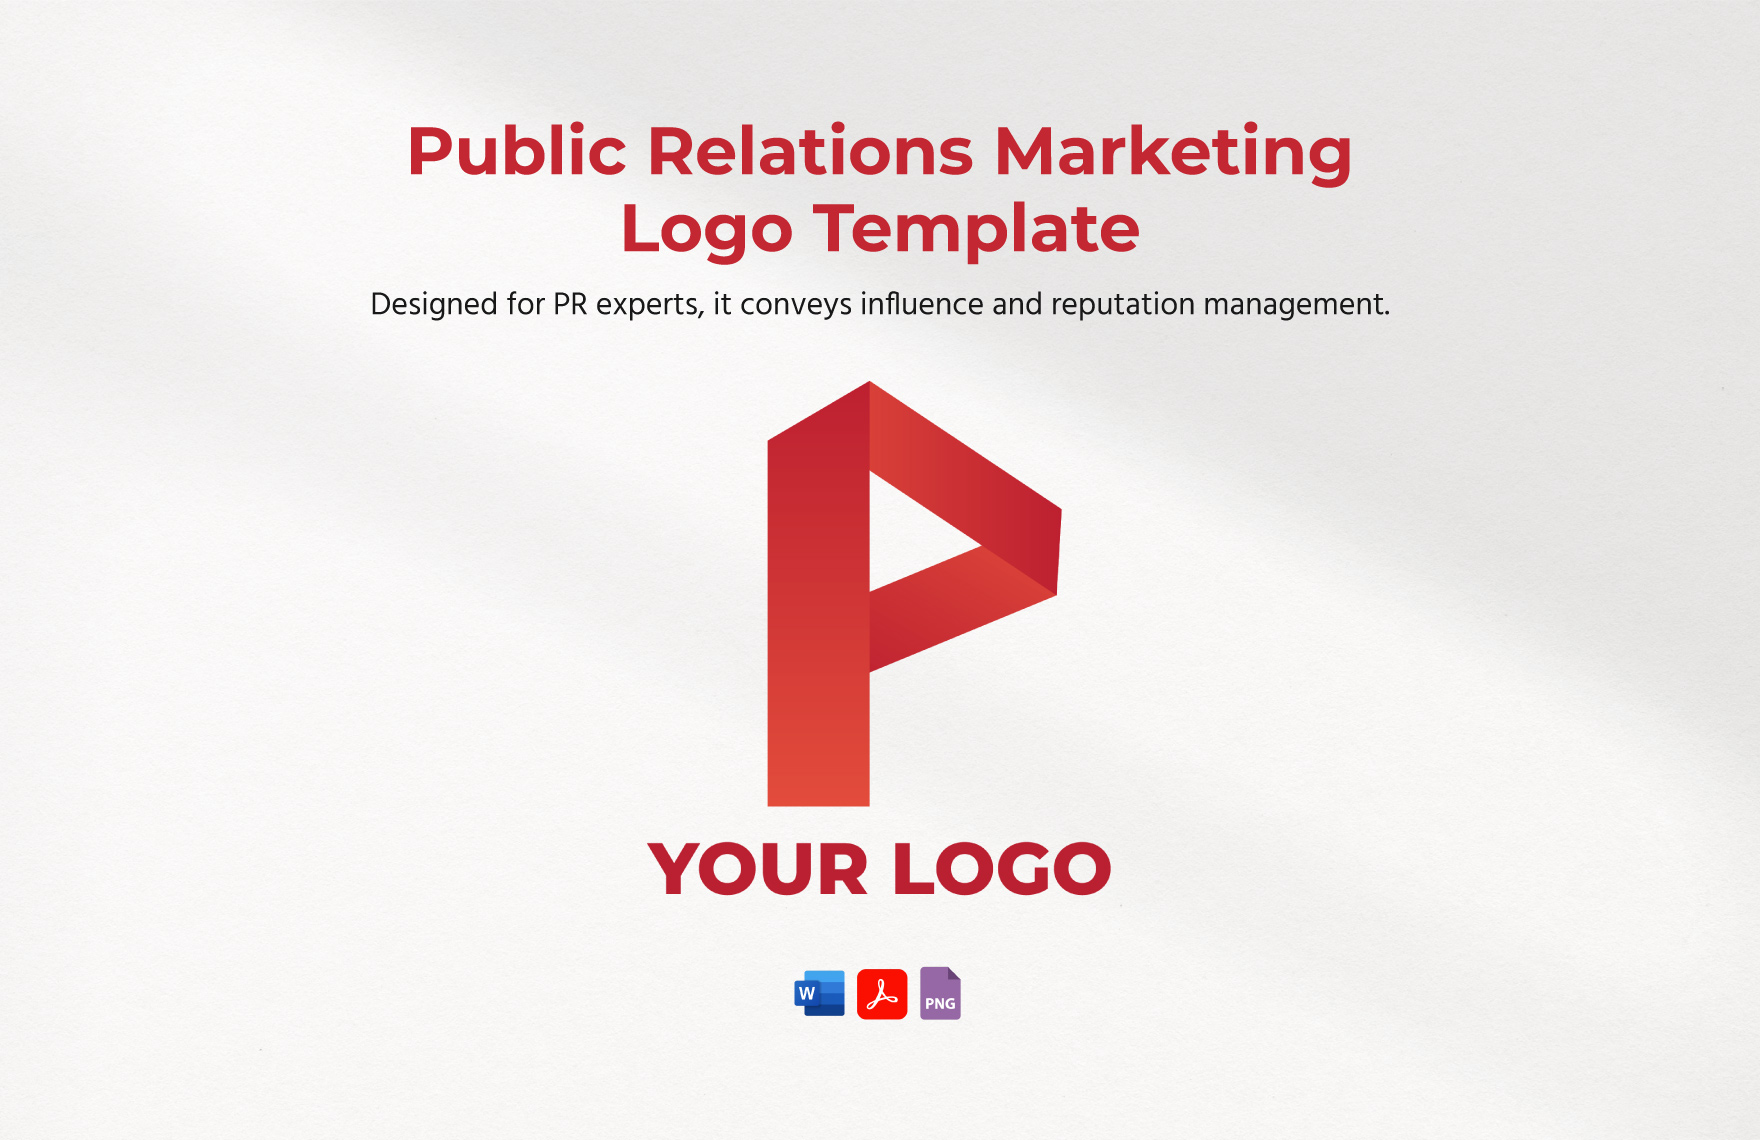 Public Relations Marketing Logo Template